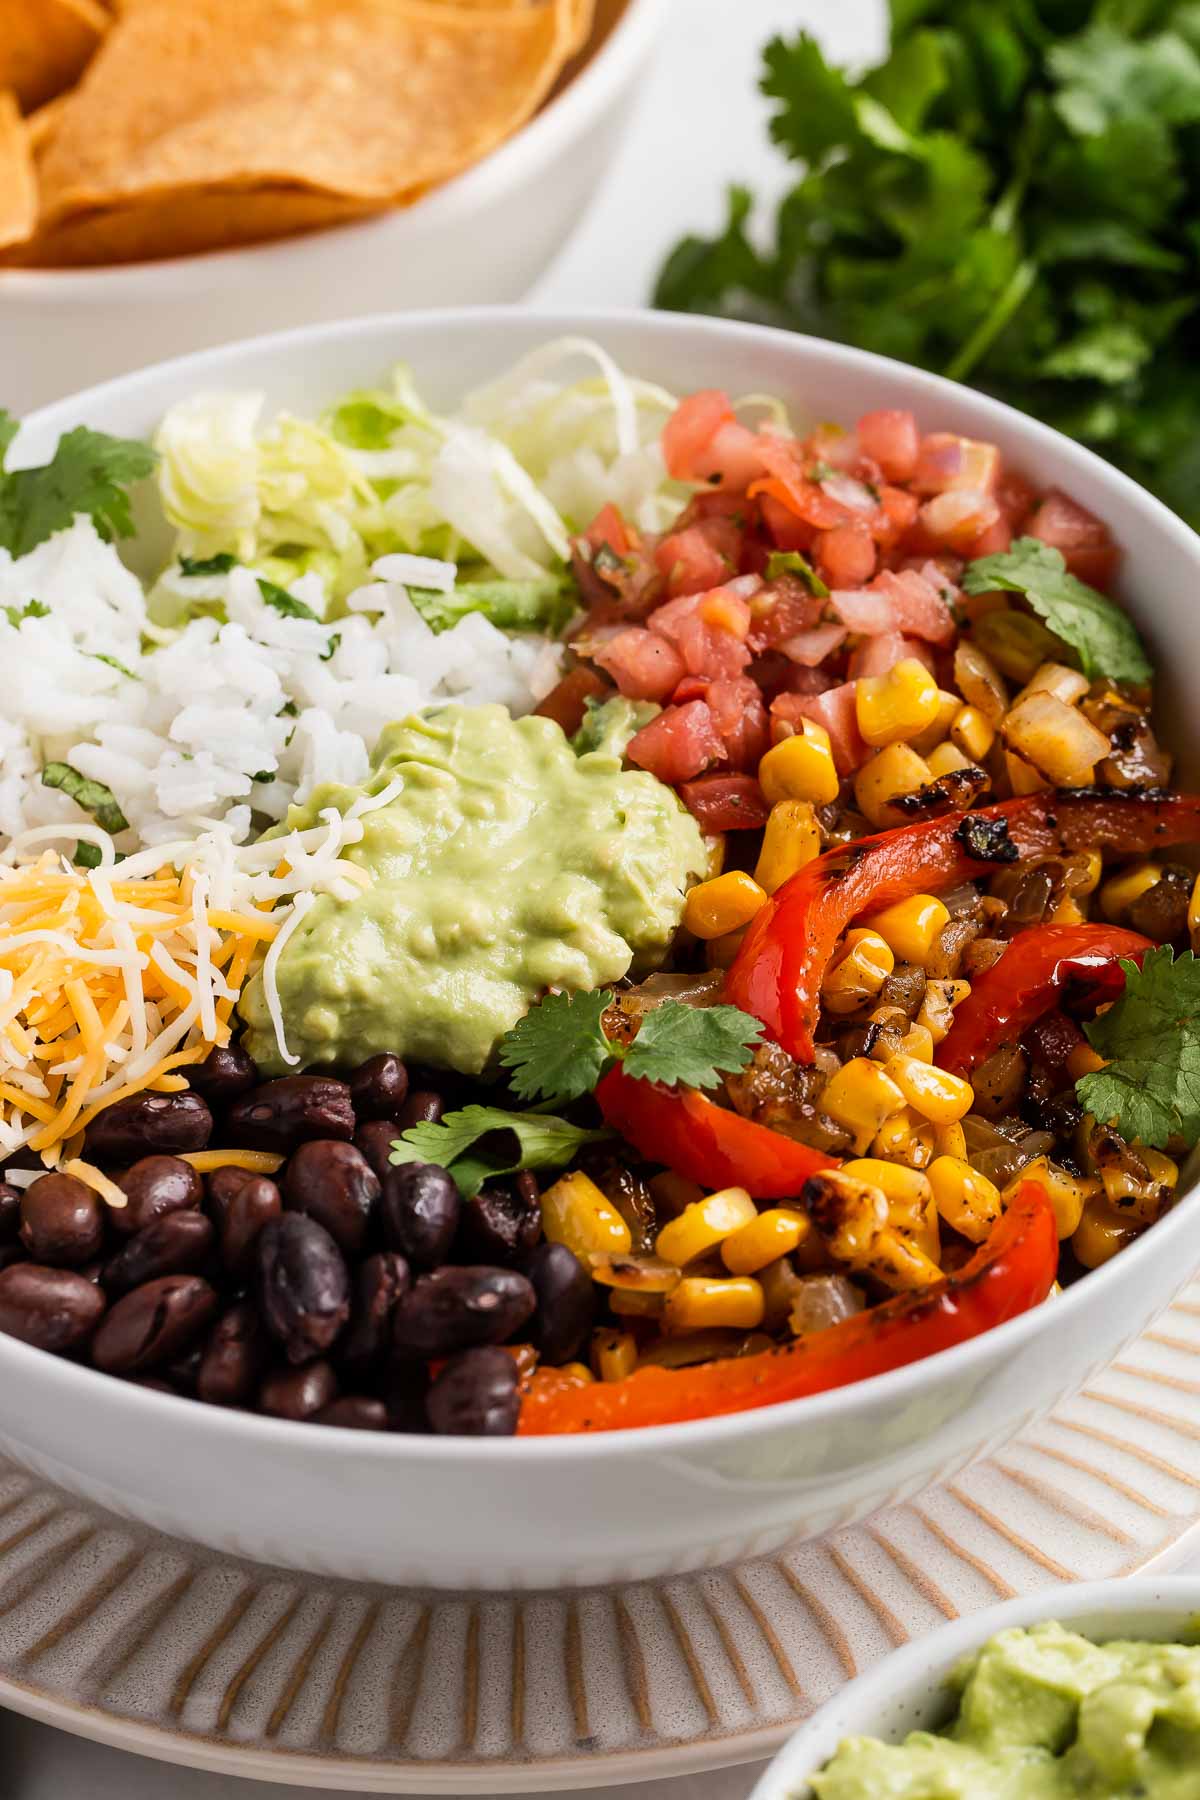 Vegan burrito bowl with black beans, veggies and guacamole.